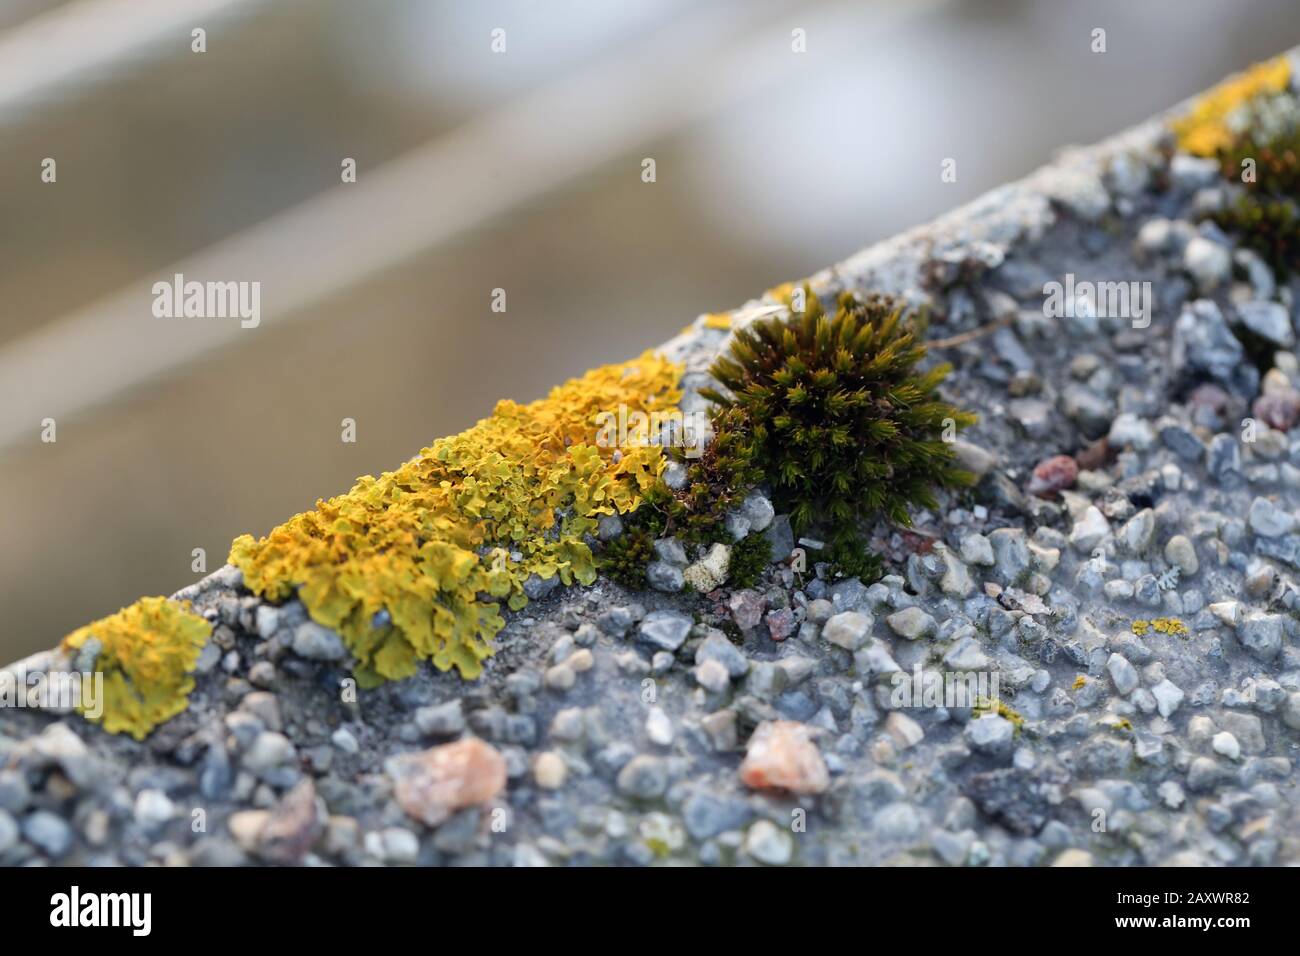 Plenty of small golden colored maritime sunburst lichen (xanthoria parietina) with green moss and some small rocks. Closeup / macro image. Stock Photo